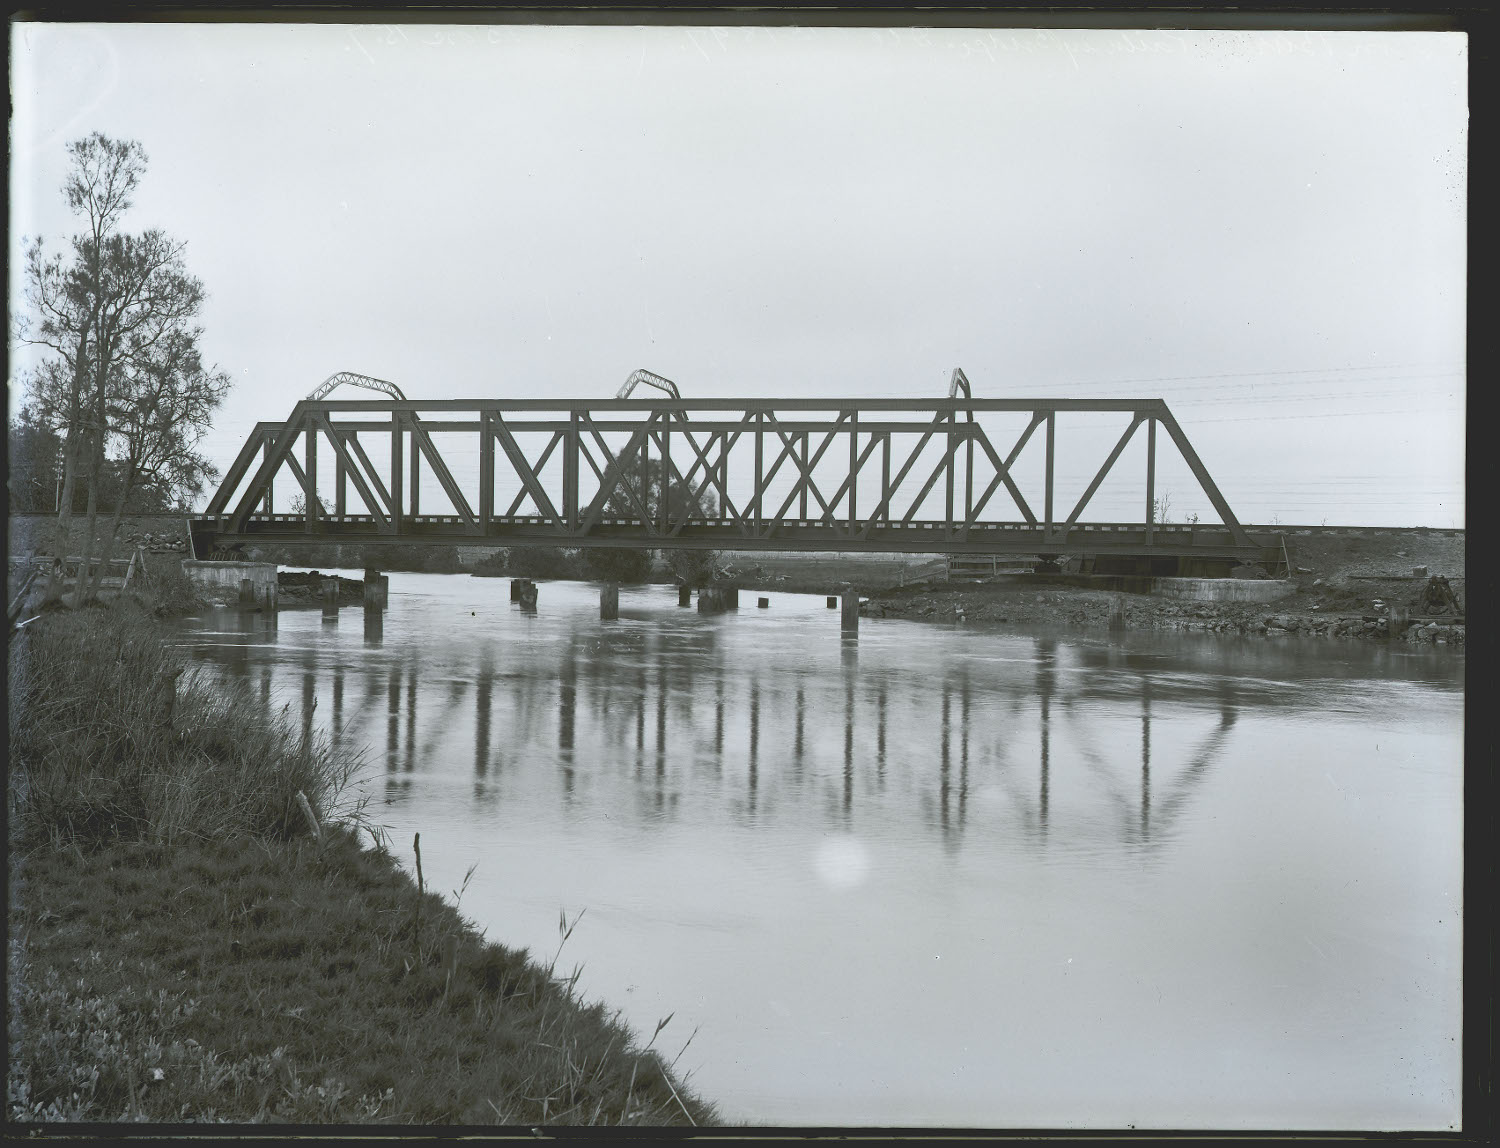 Ironbark Bridge 9 December 1897 (Barney-Snowball Collection)